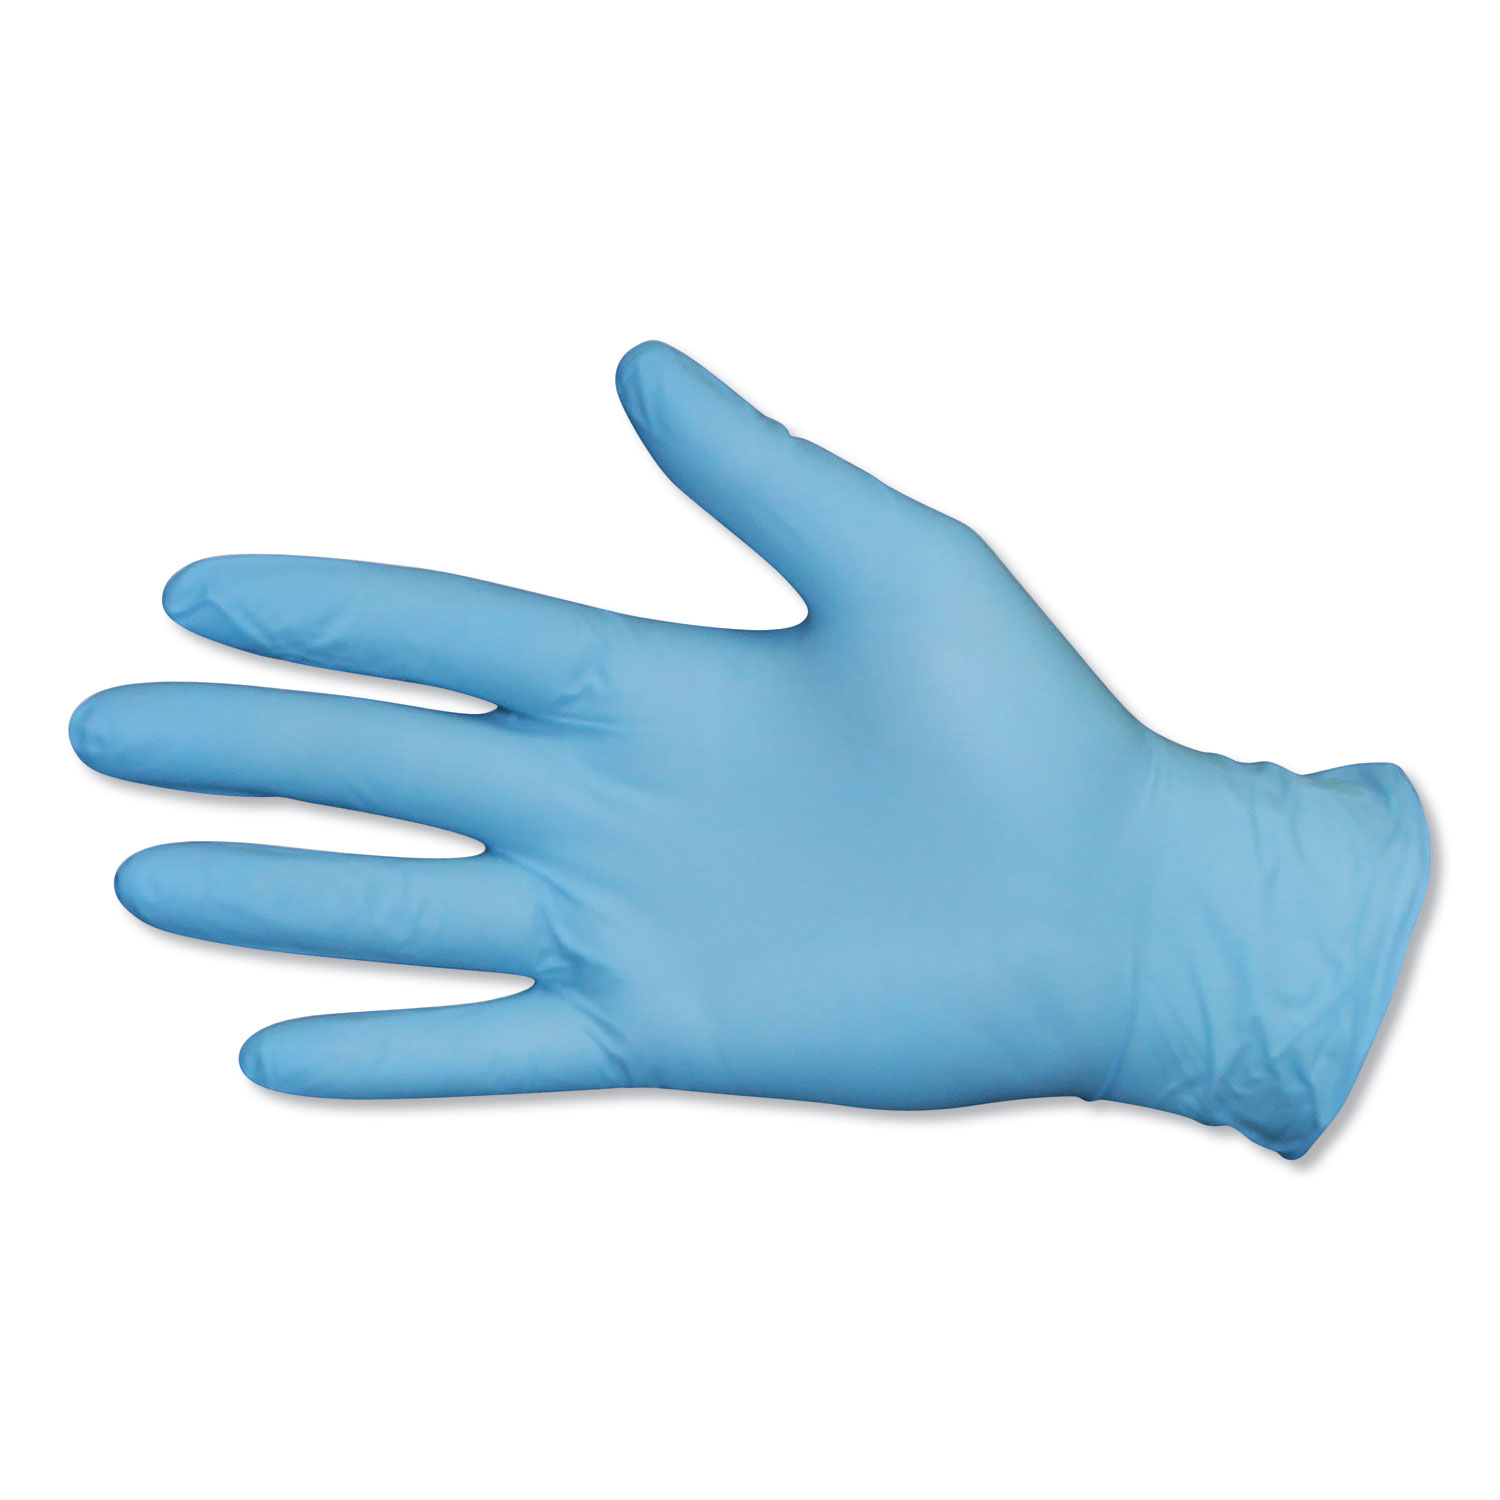  Impact IMP 8645S DiversaMed Disposable Powder-Free Exam Nitrile Gloves, Blue, Small, 100/Box, 10 Boxes/Carton (IMP8645S) 